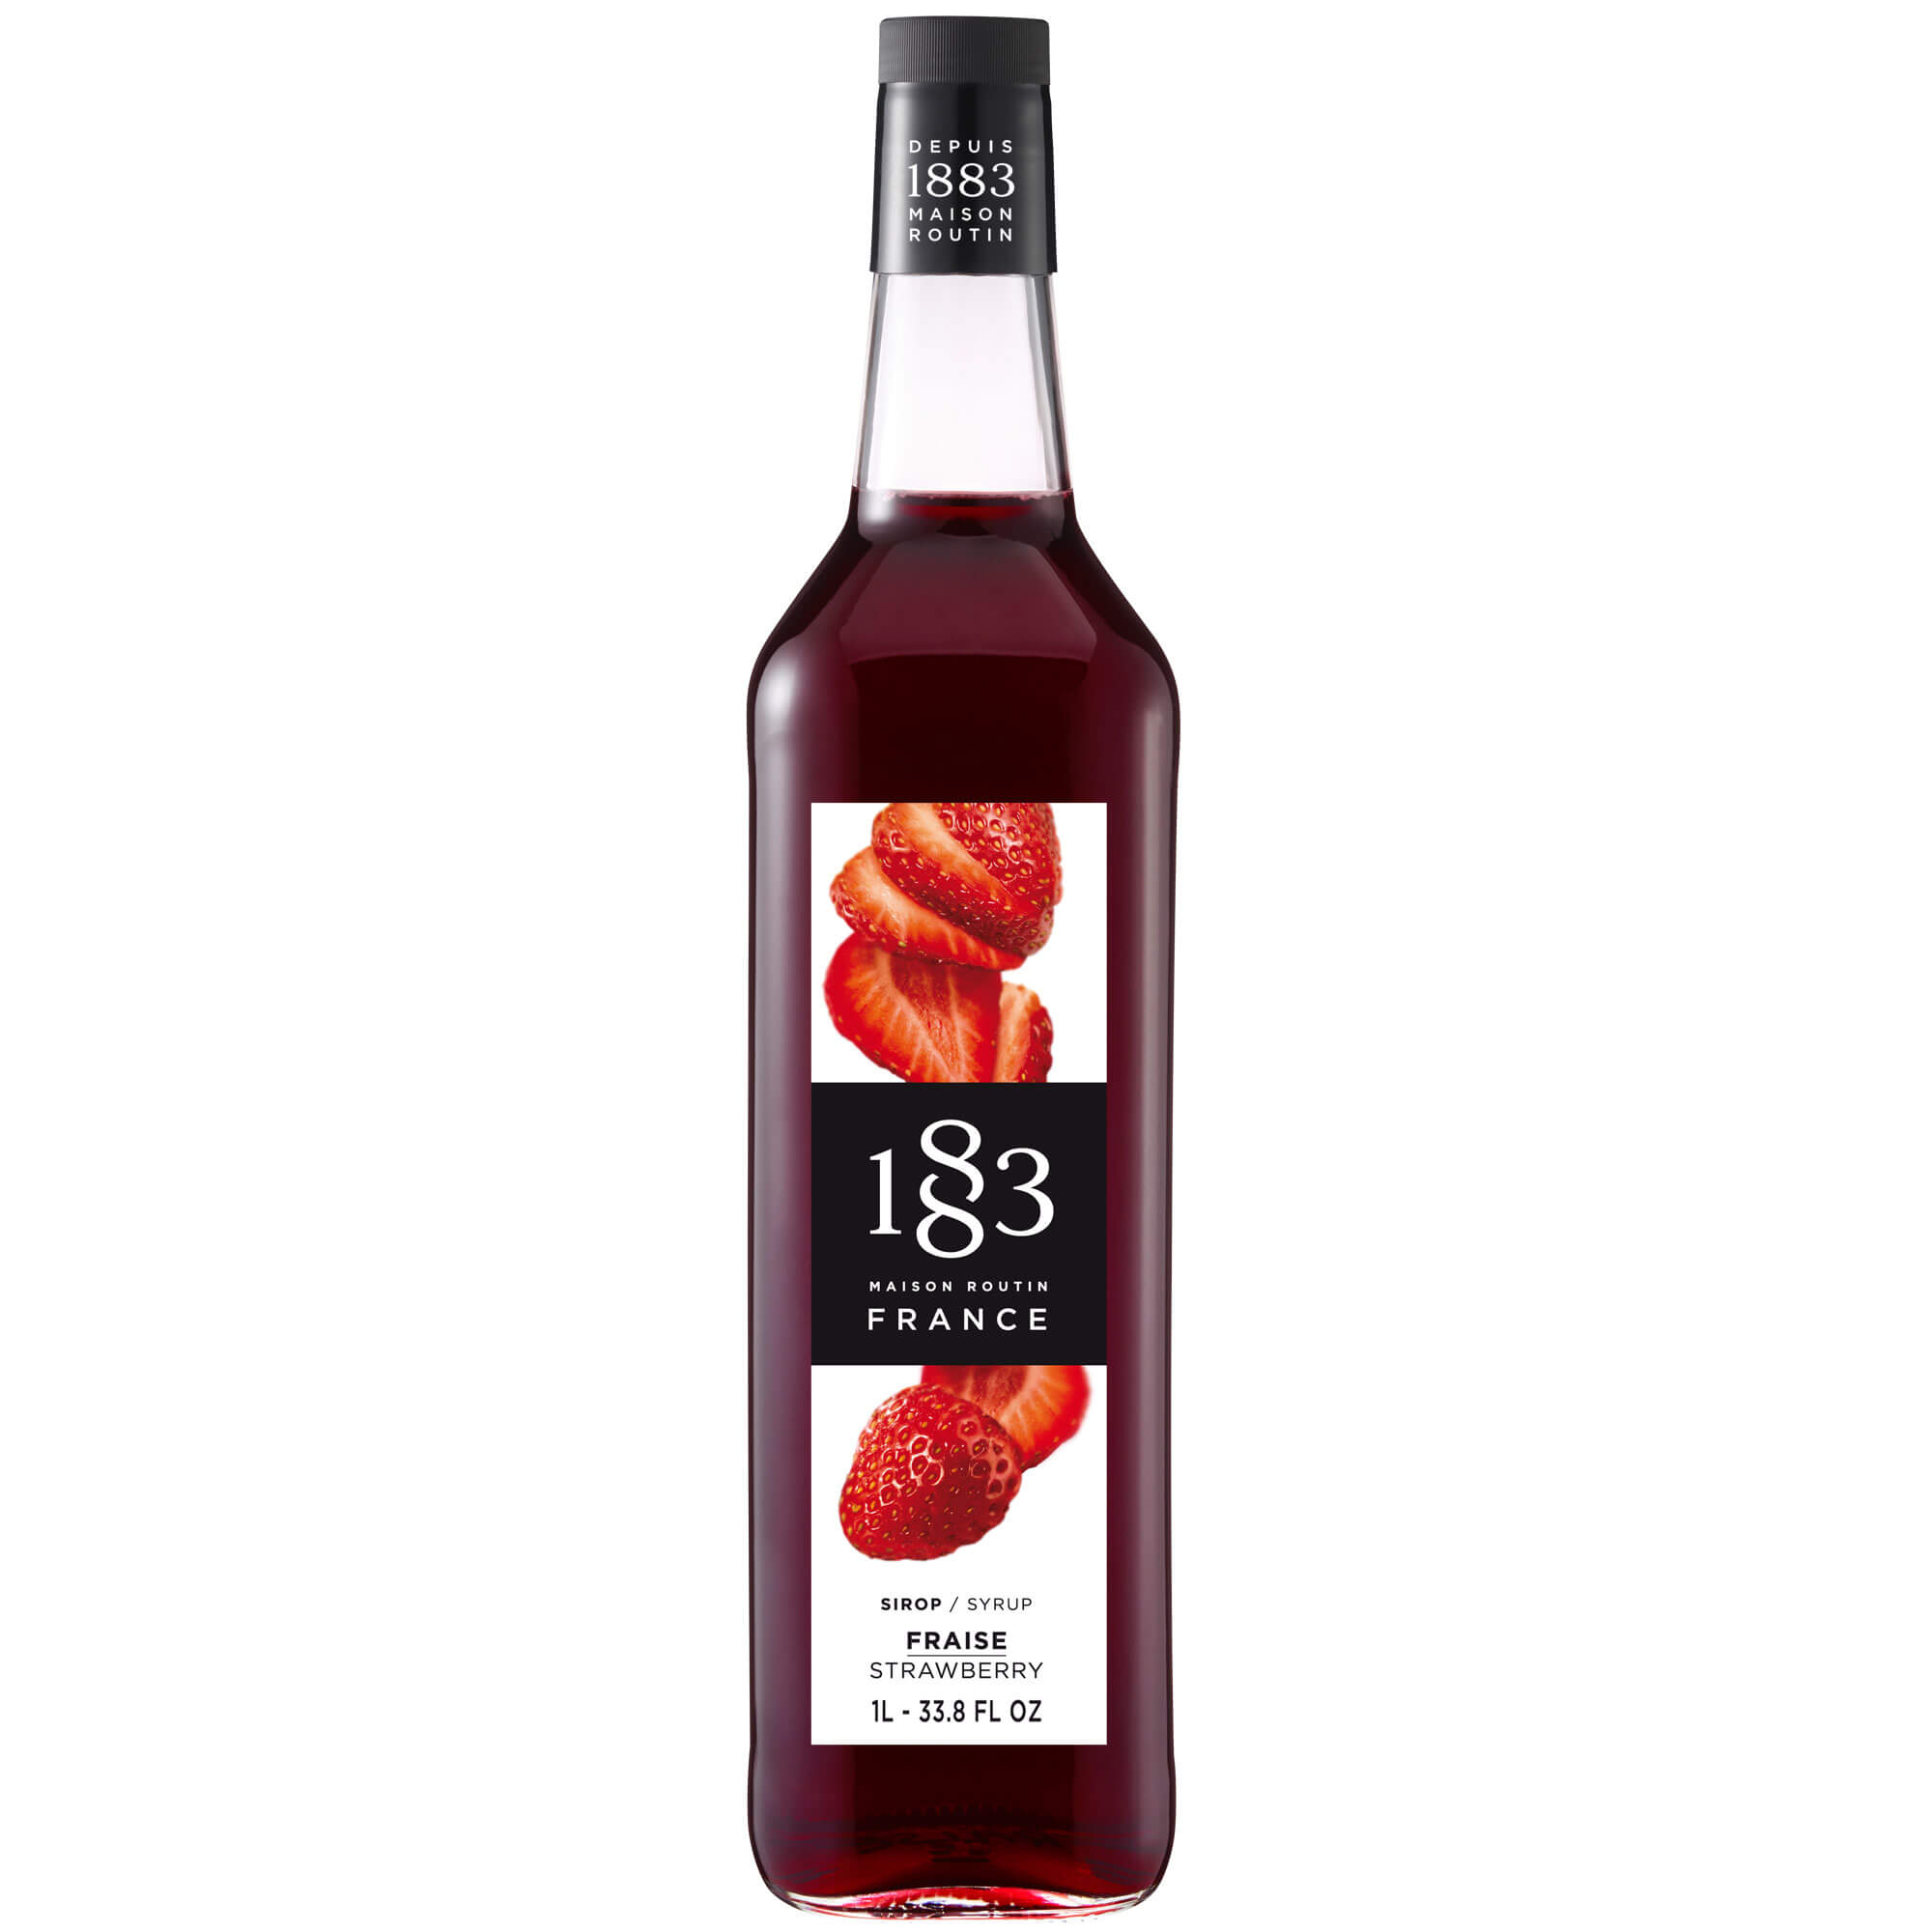 Strawberry - Maison Routin 1883 syrup (1,0l)